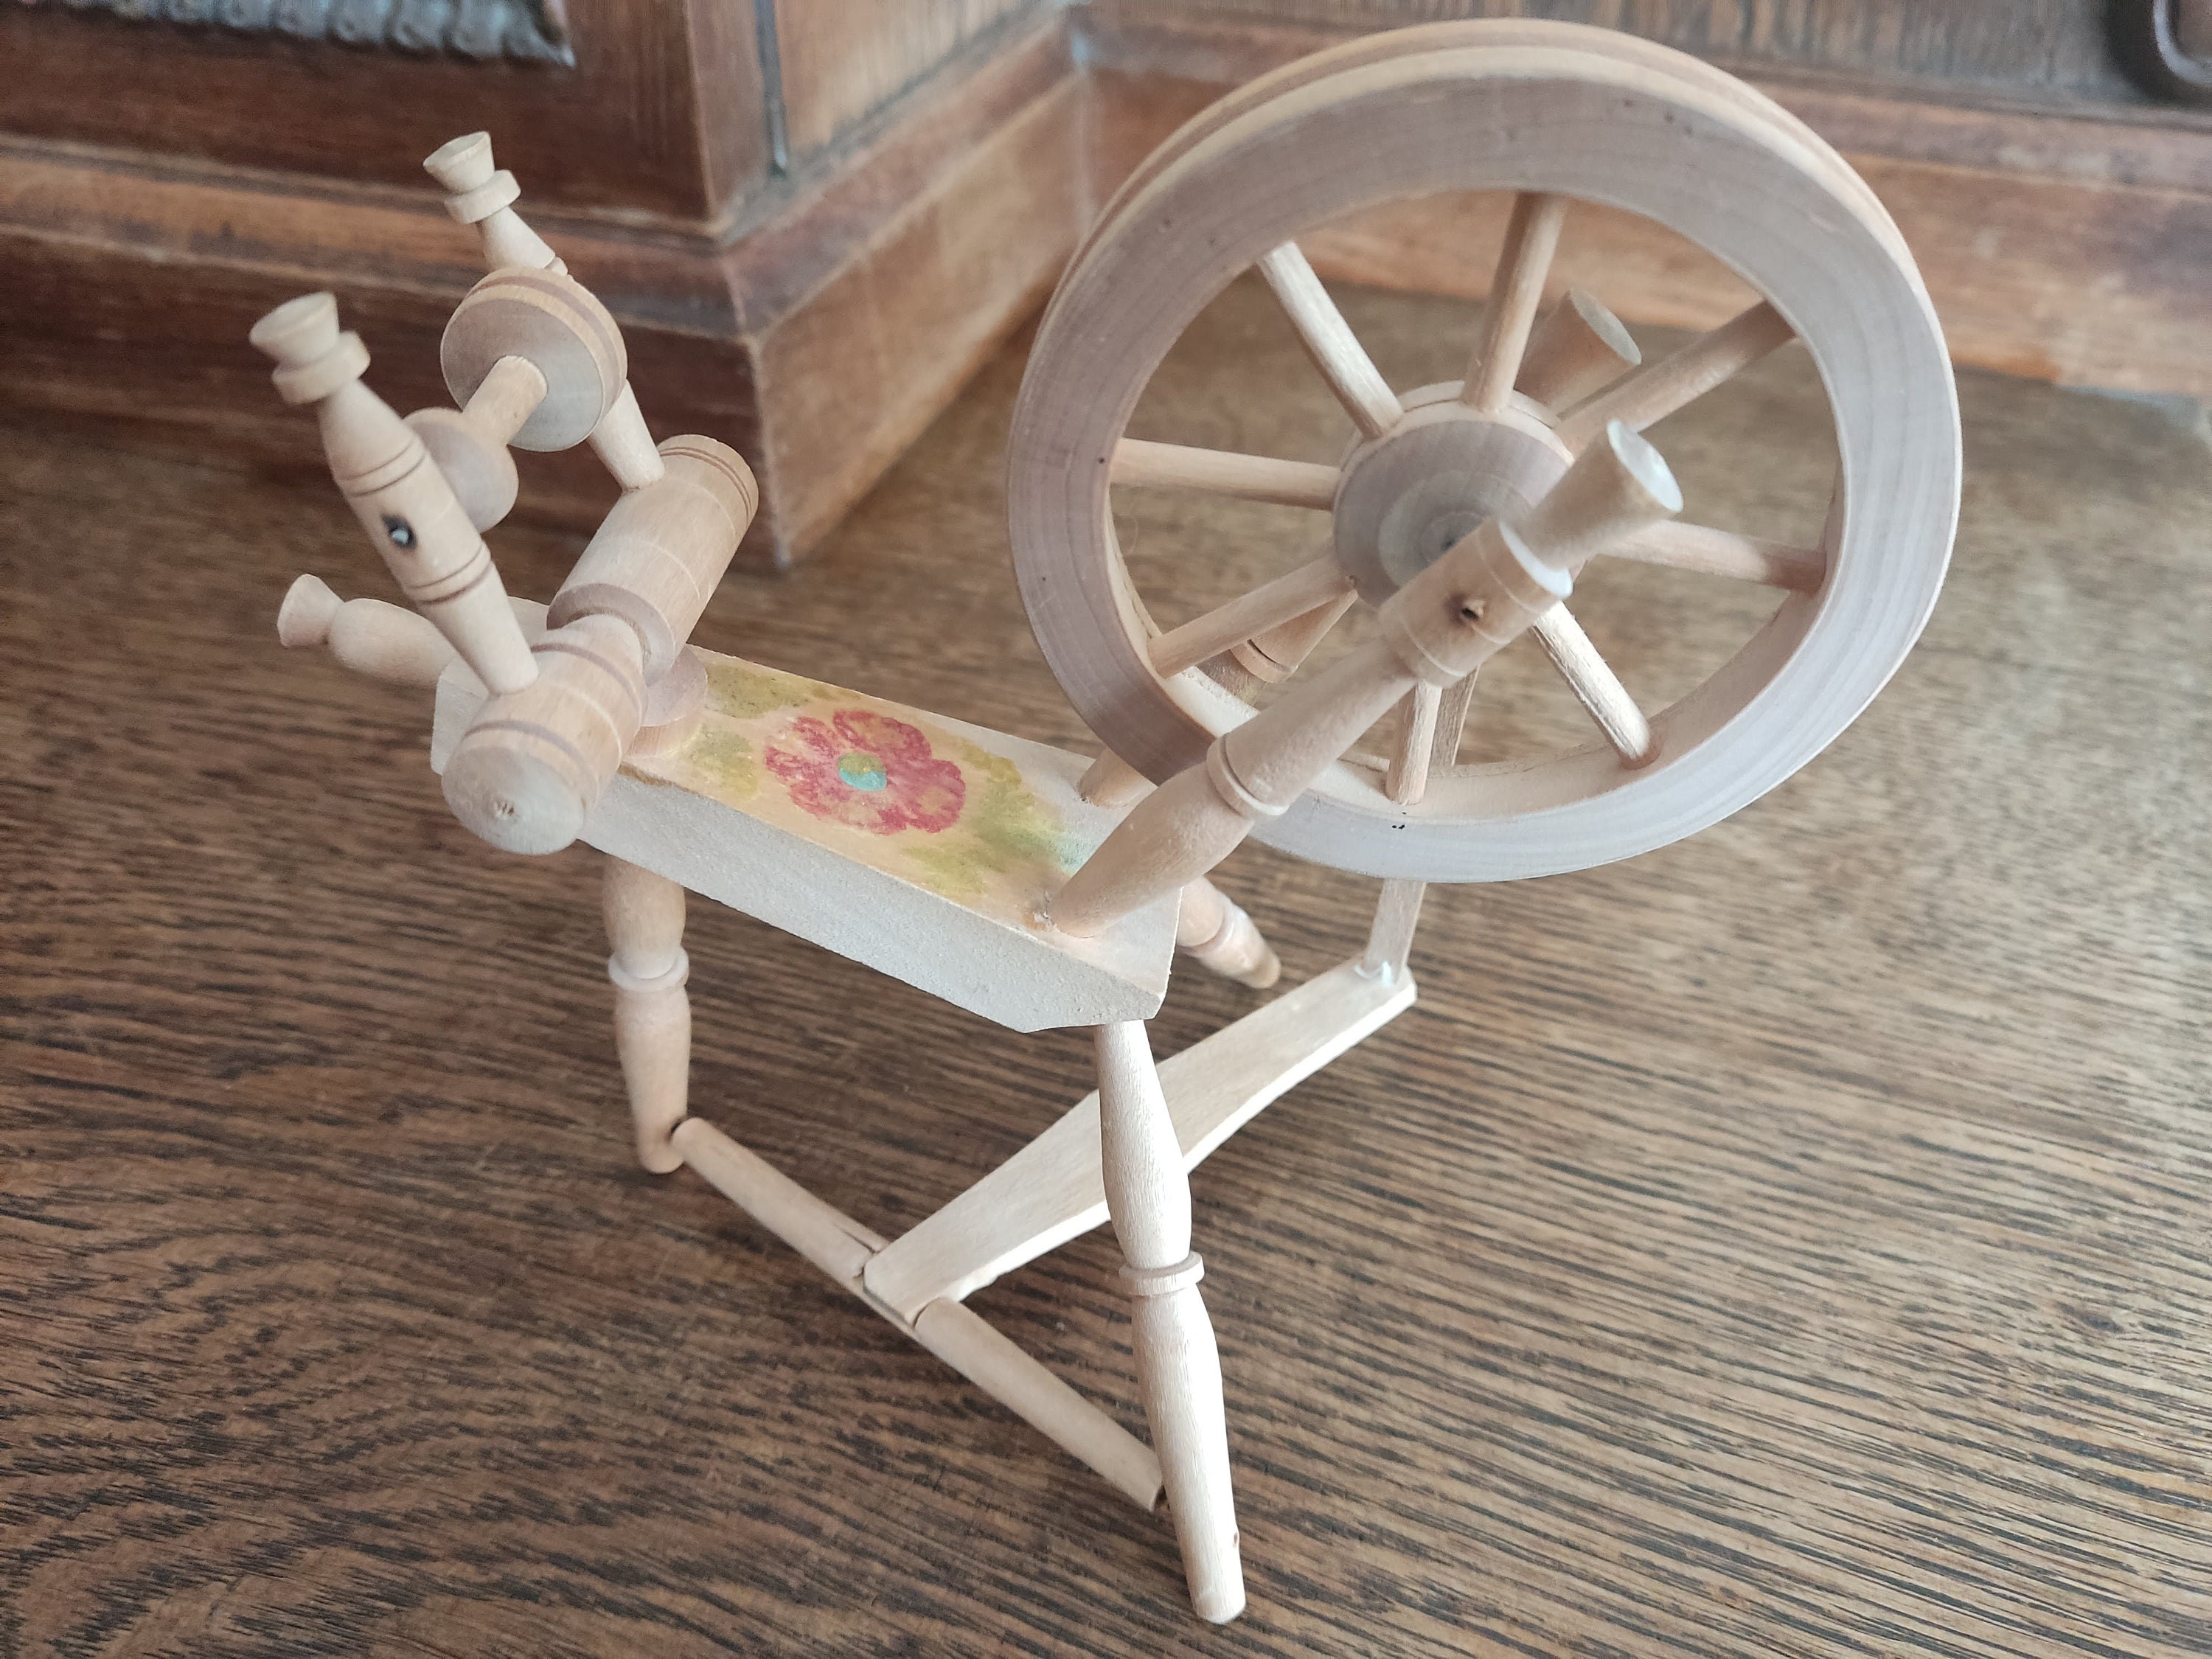 Handcrafted Wooden Spinning Wheel Fiber Art Tool Traditional